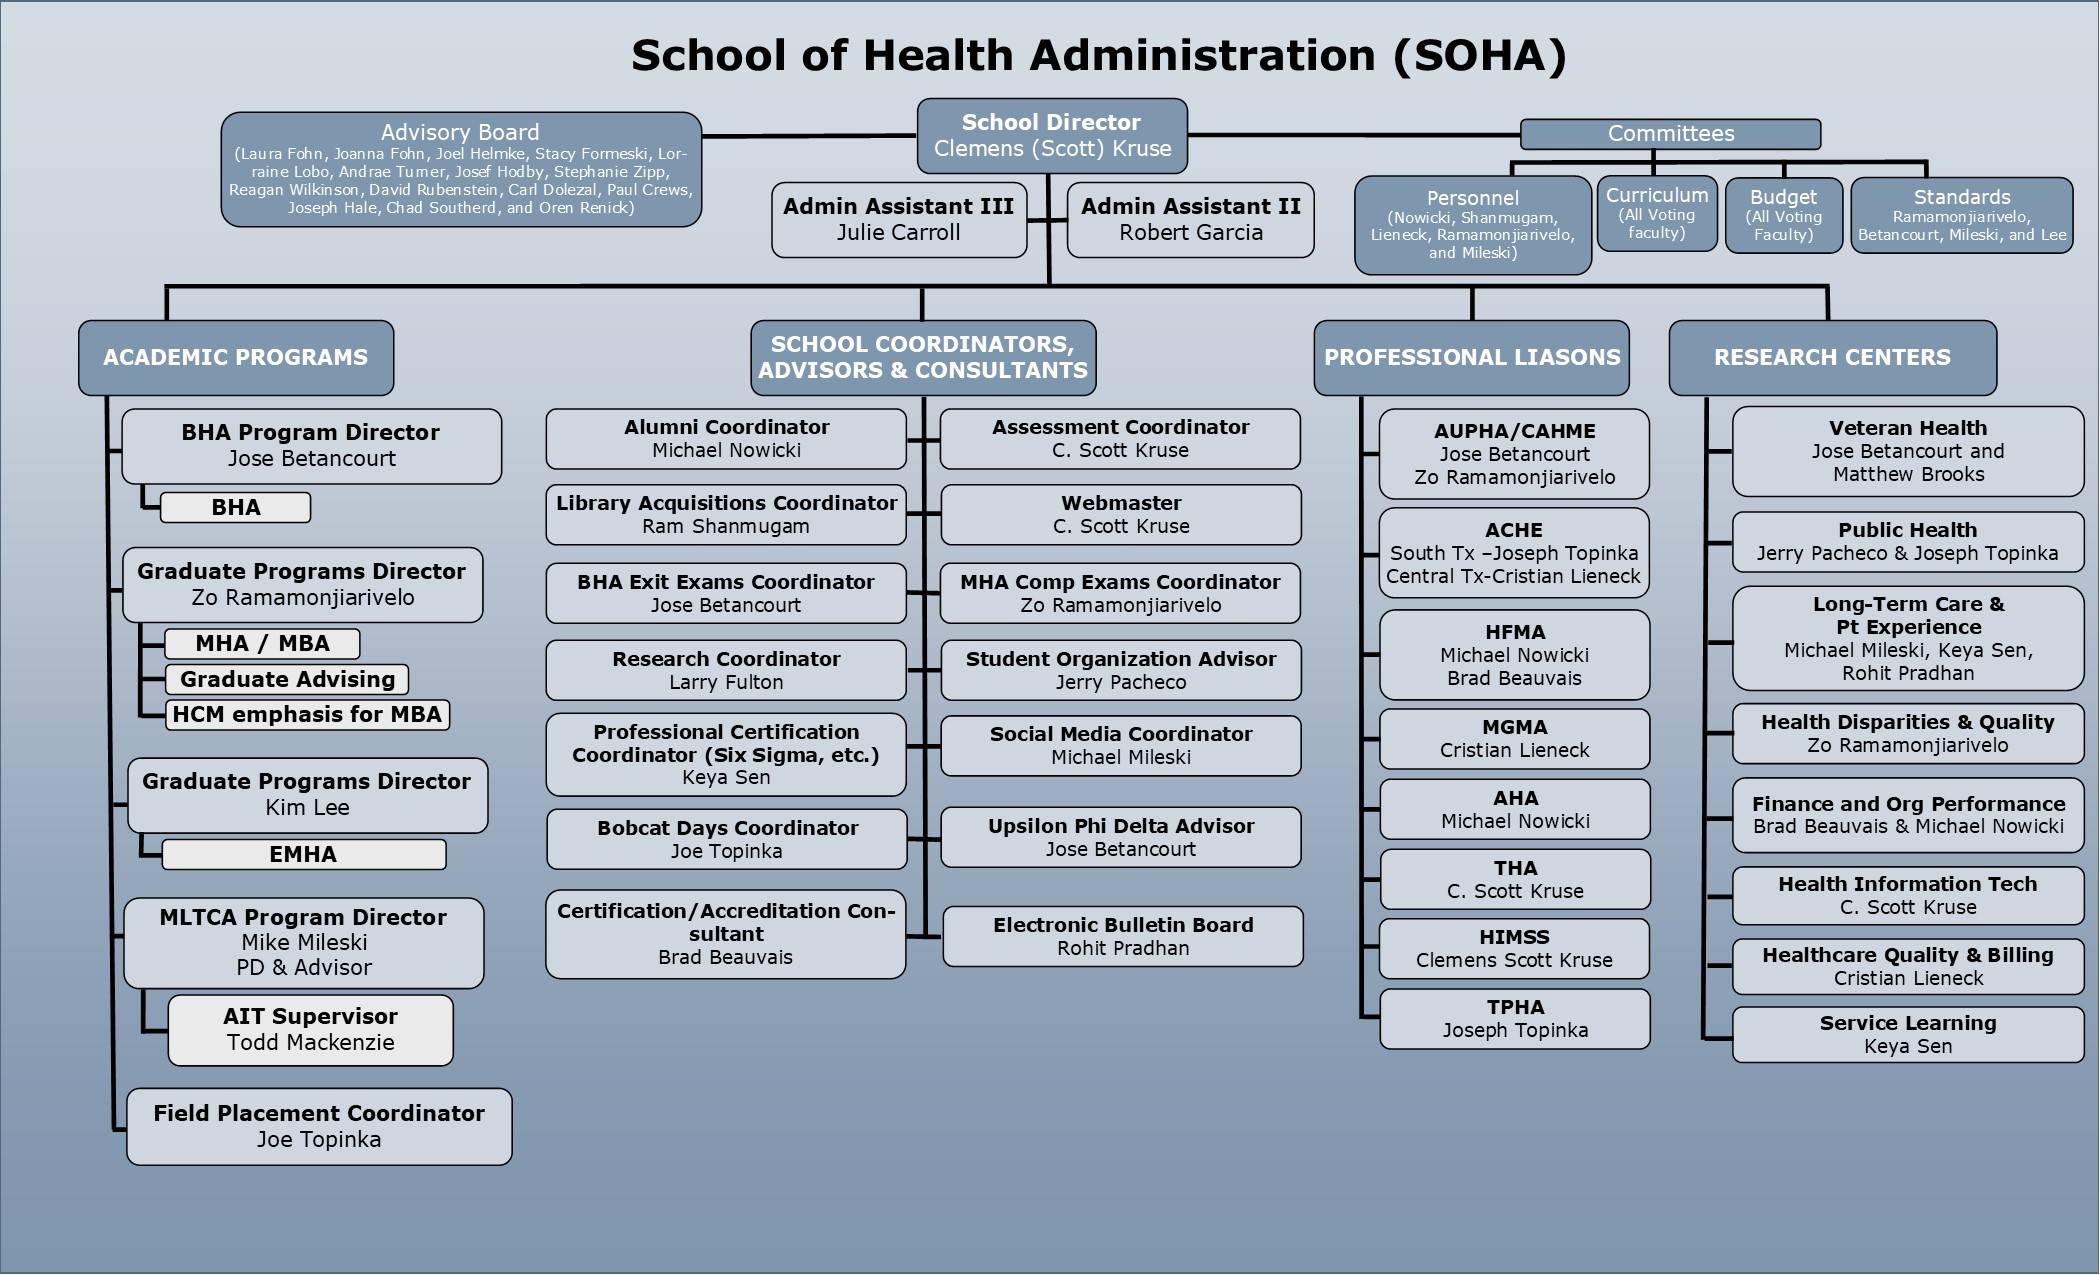 SOHA Organizational Diagram